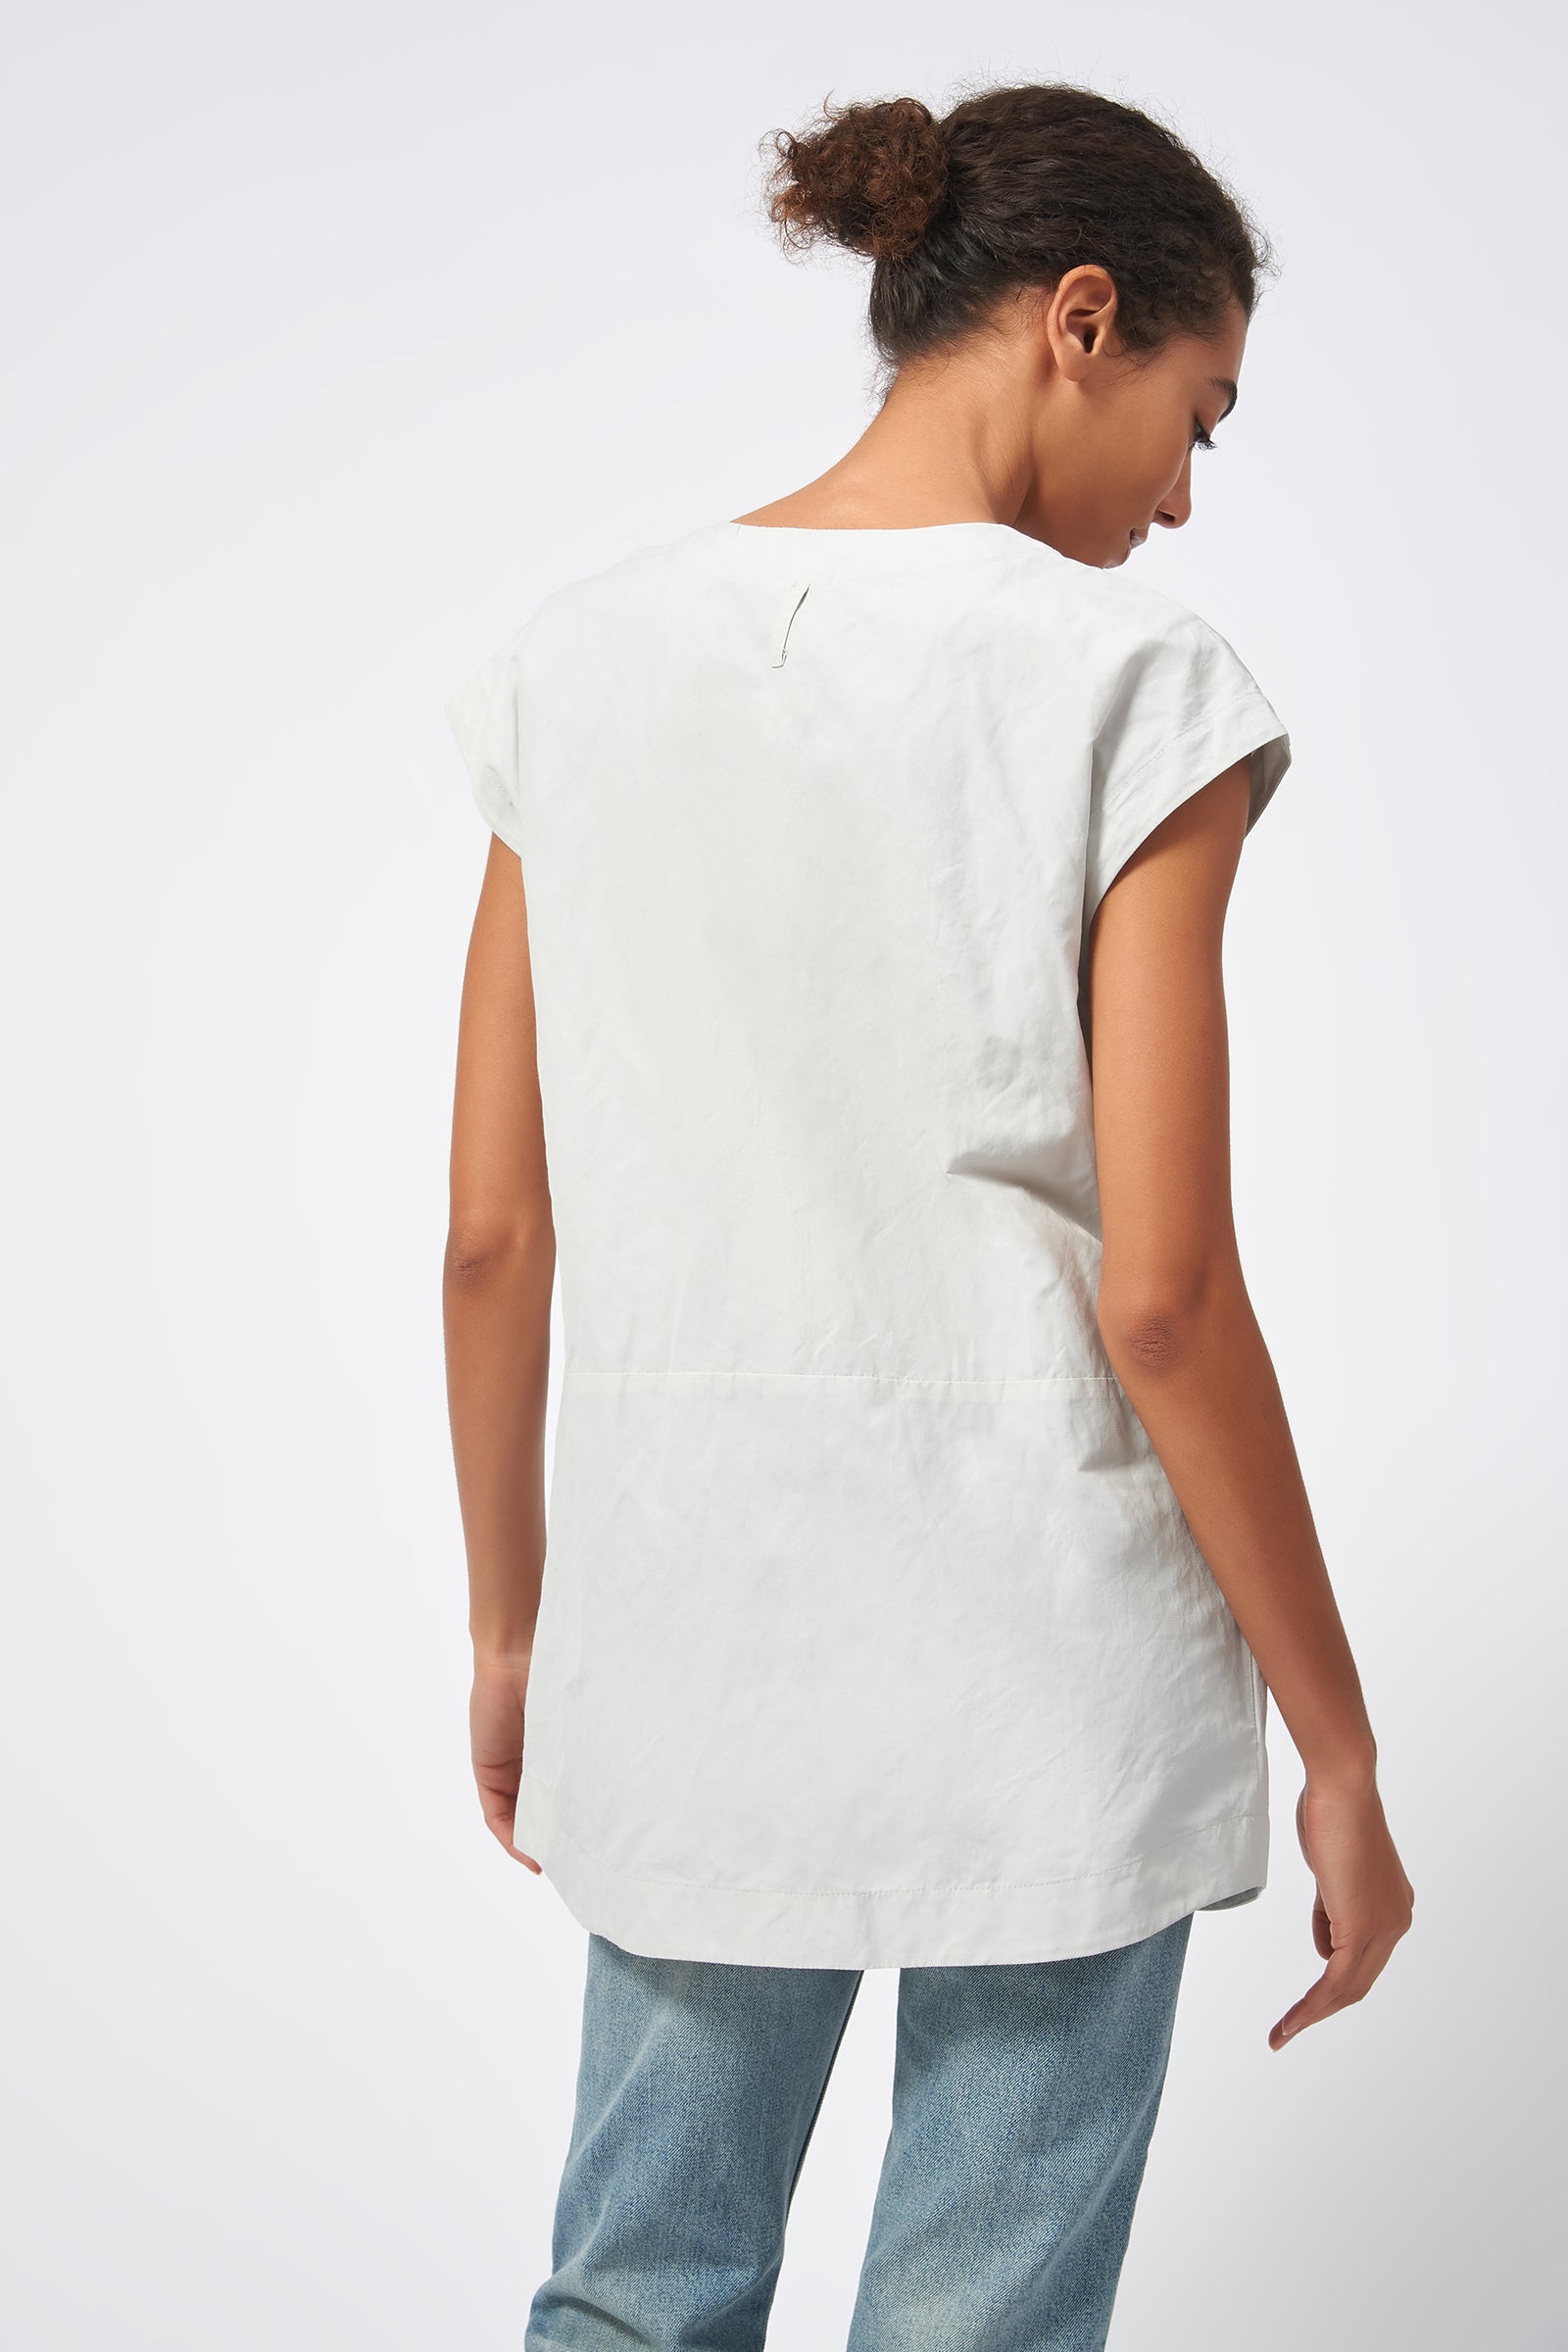 Kal Rieman Seam Pocket Tunic in Stone Cotton Nylon on Model Back View Crop